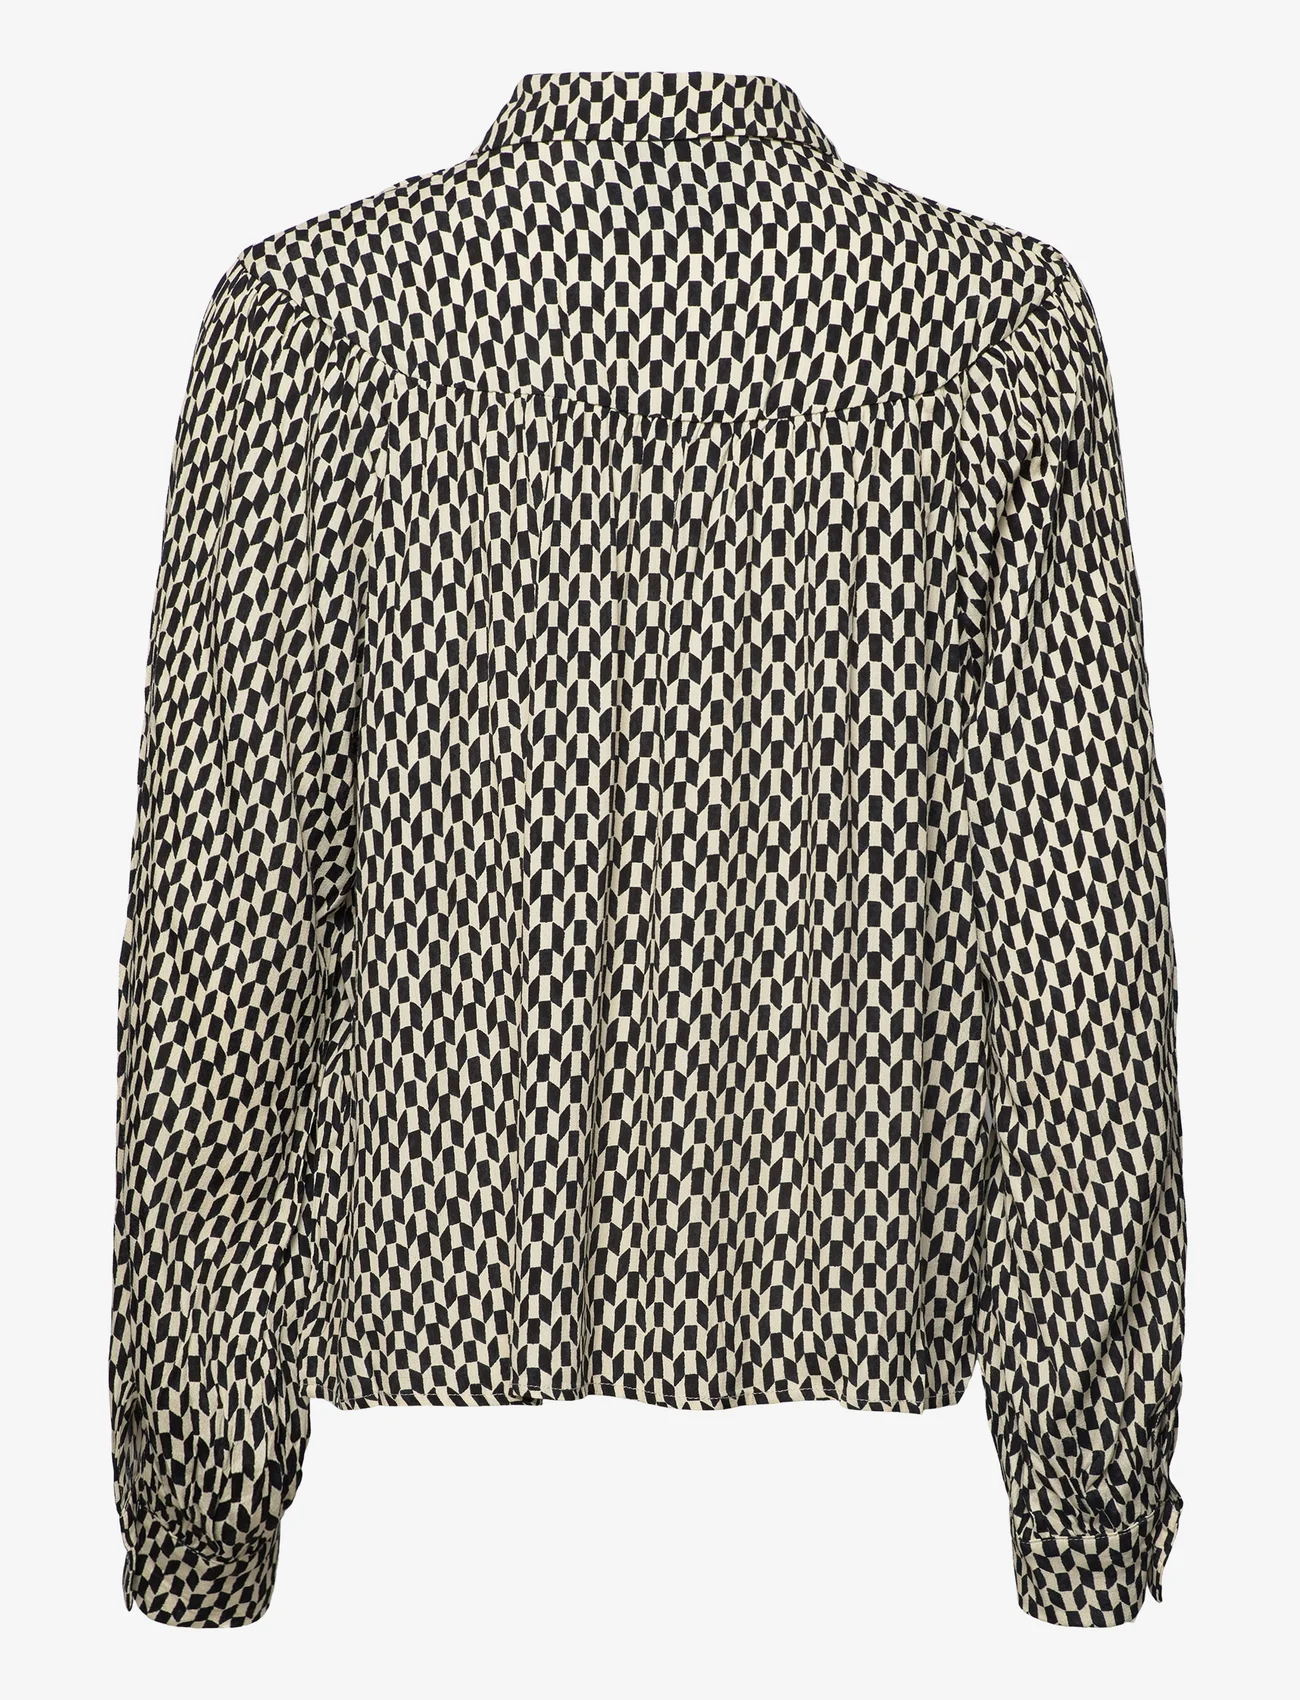 Minus - Lasina Shirt 1 - langärmlige hemden - monocrome print - 1